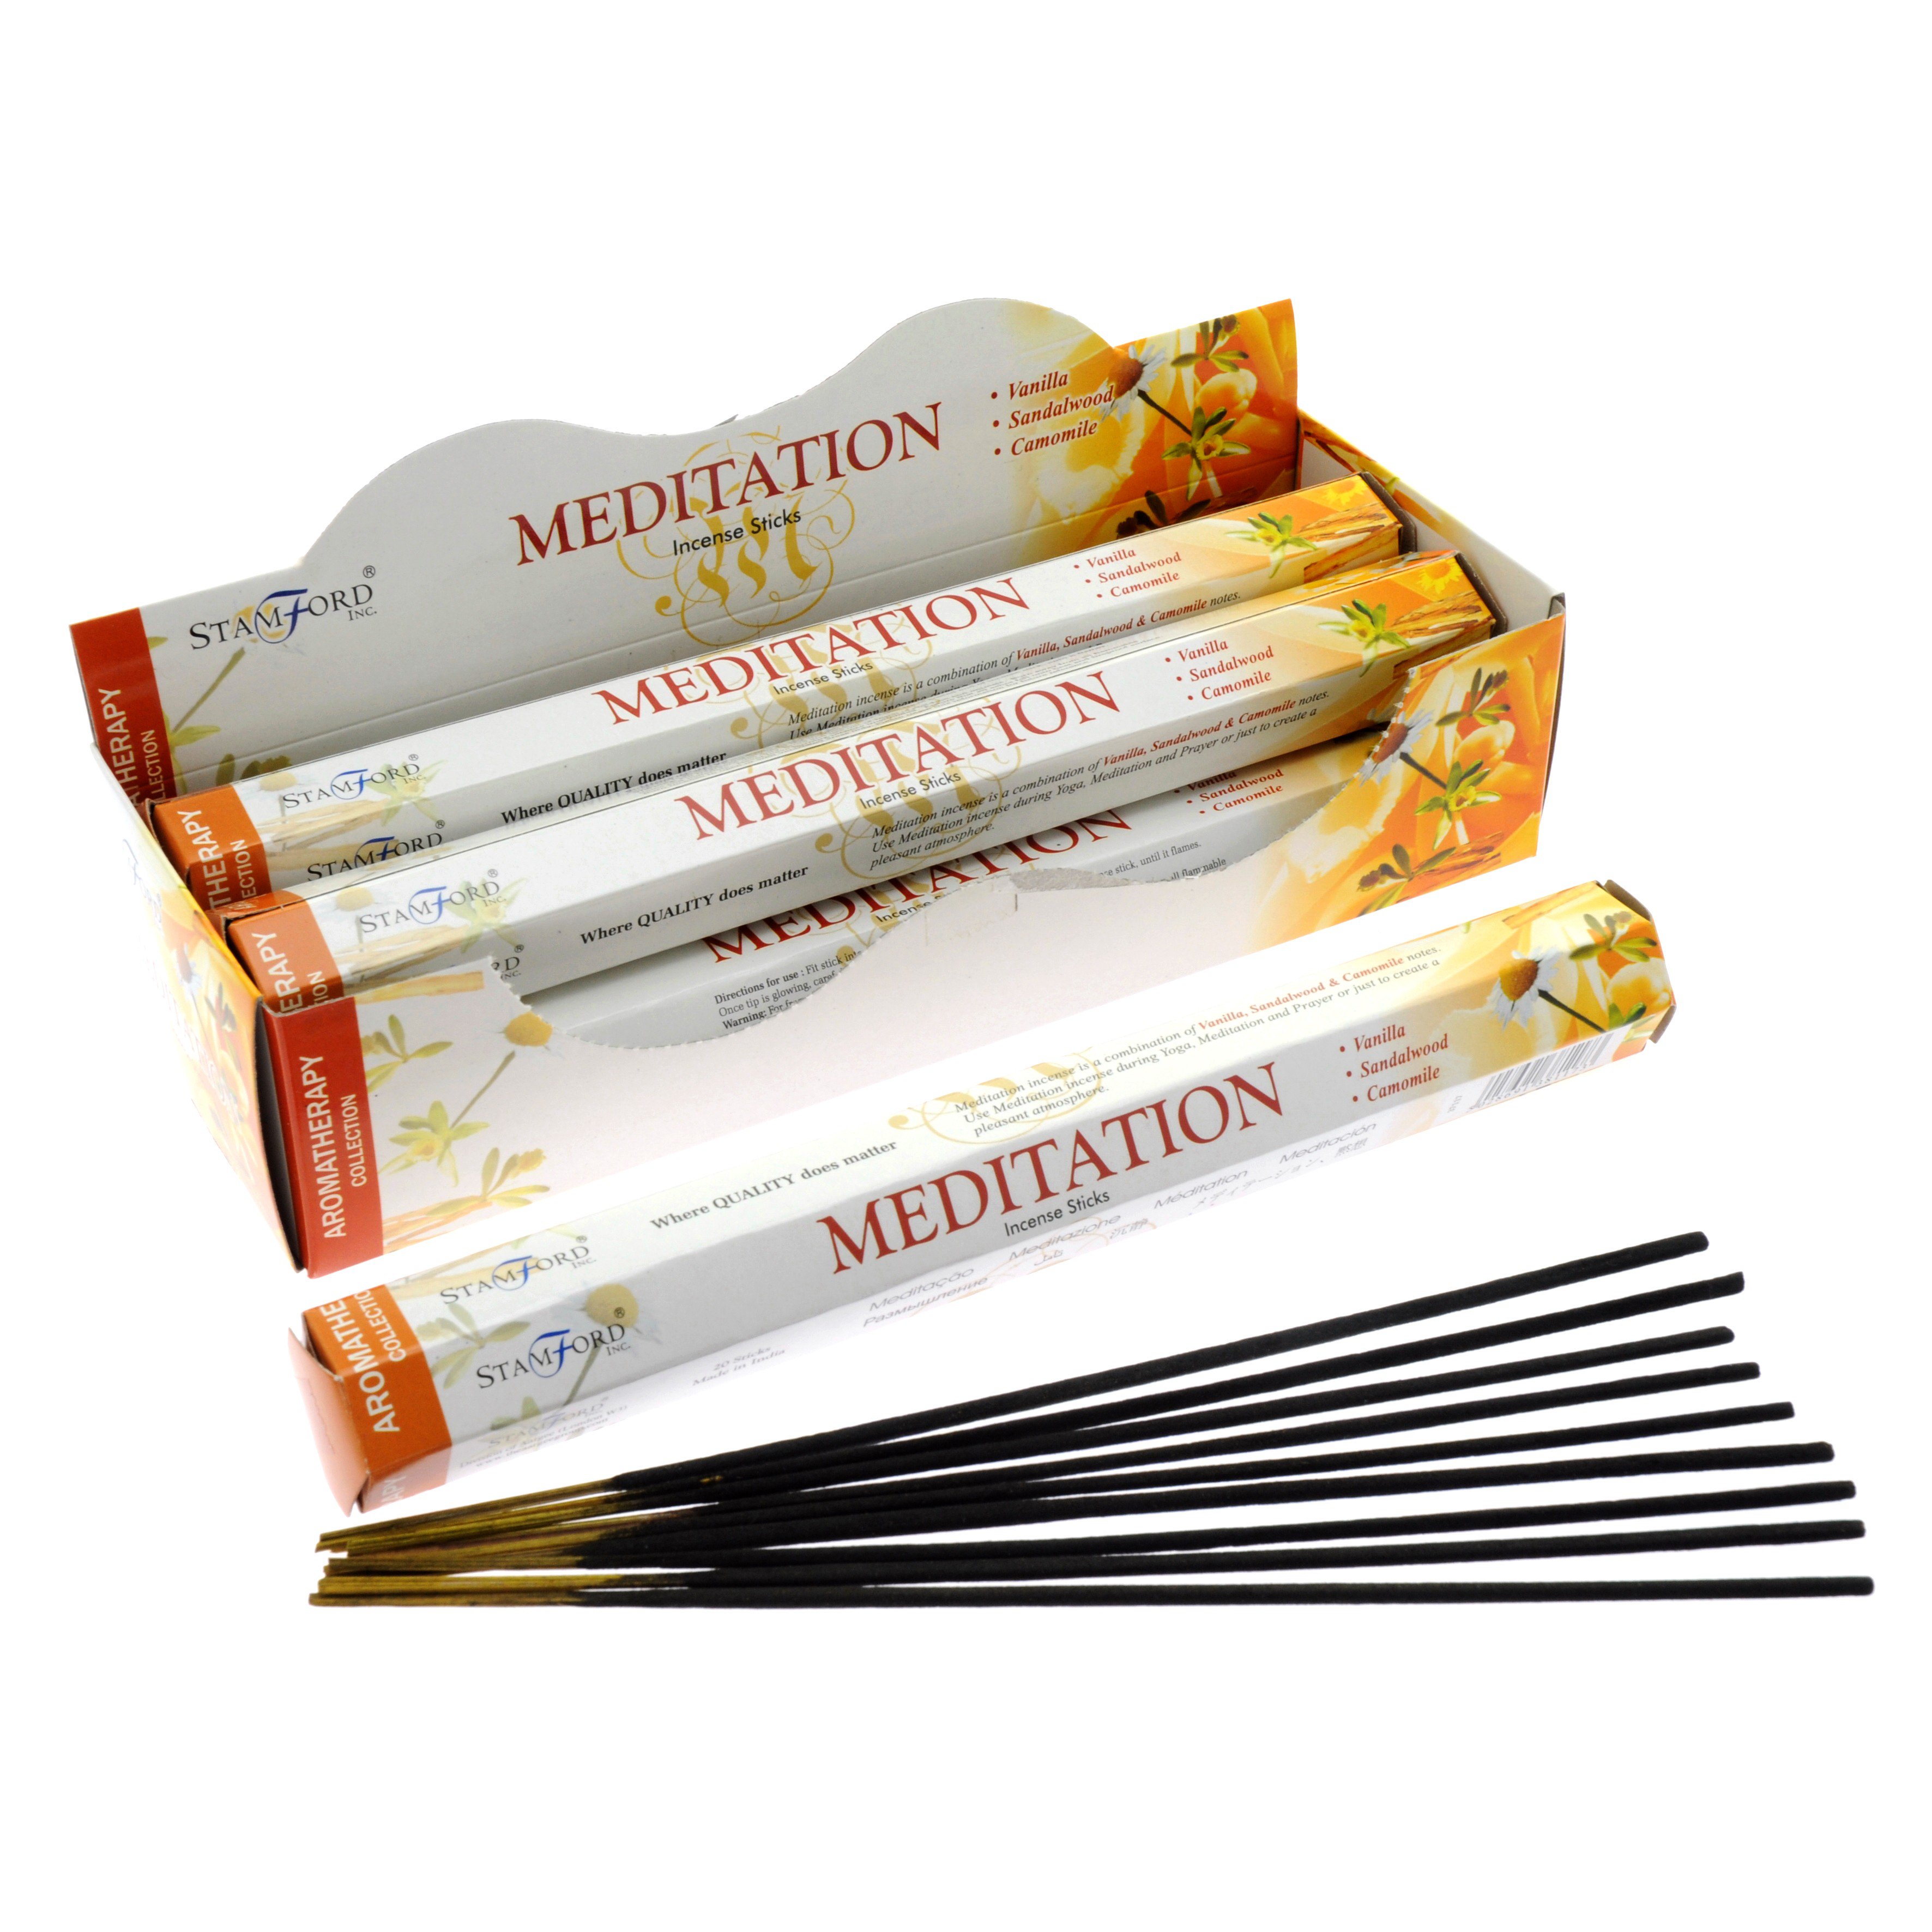 Meditation Incense sticks